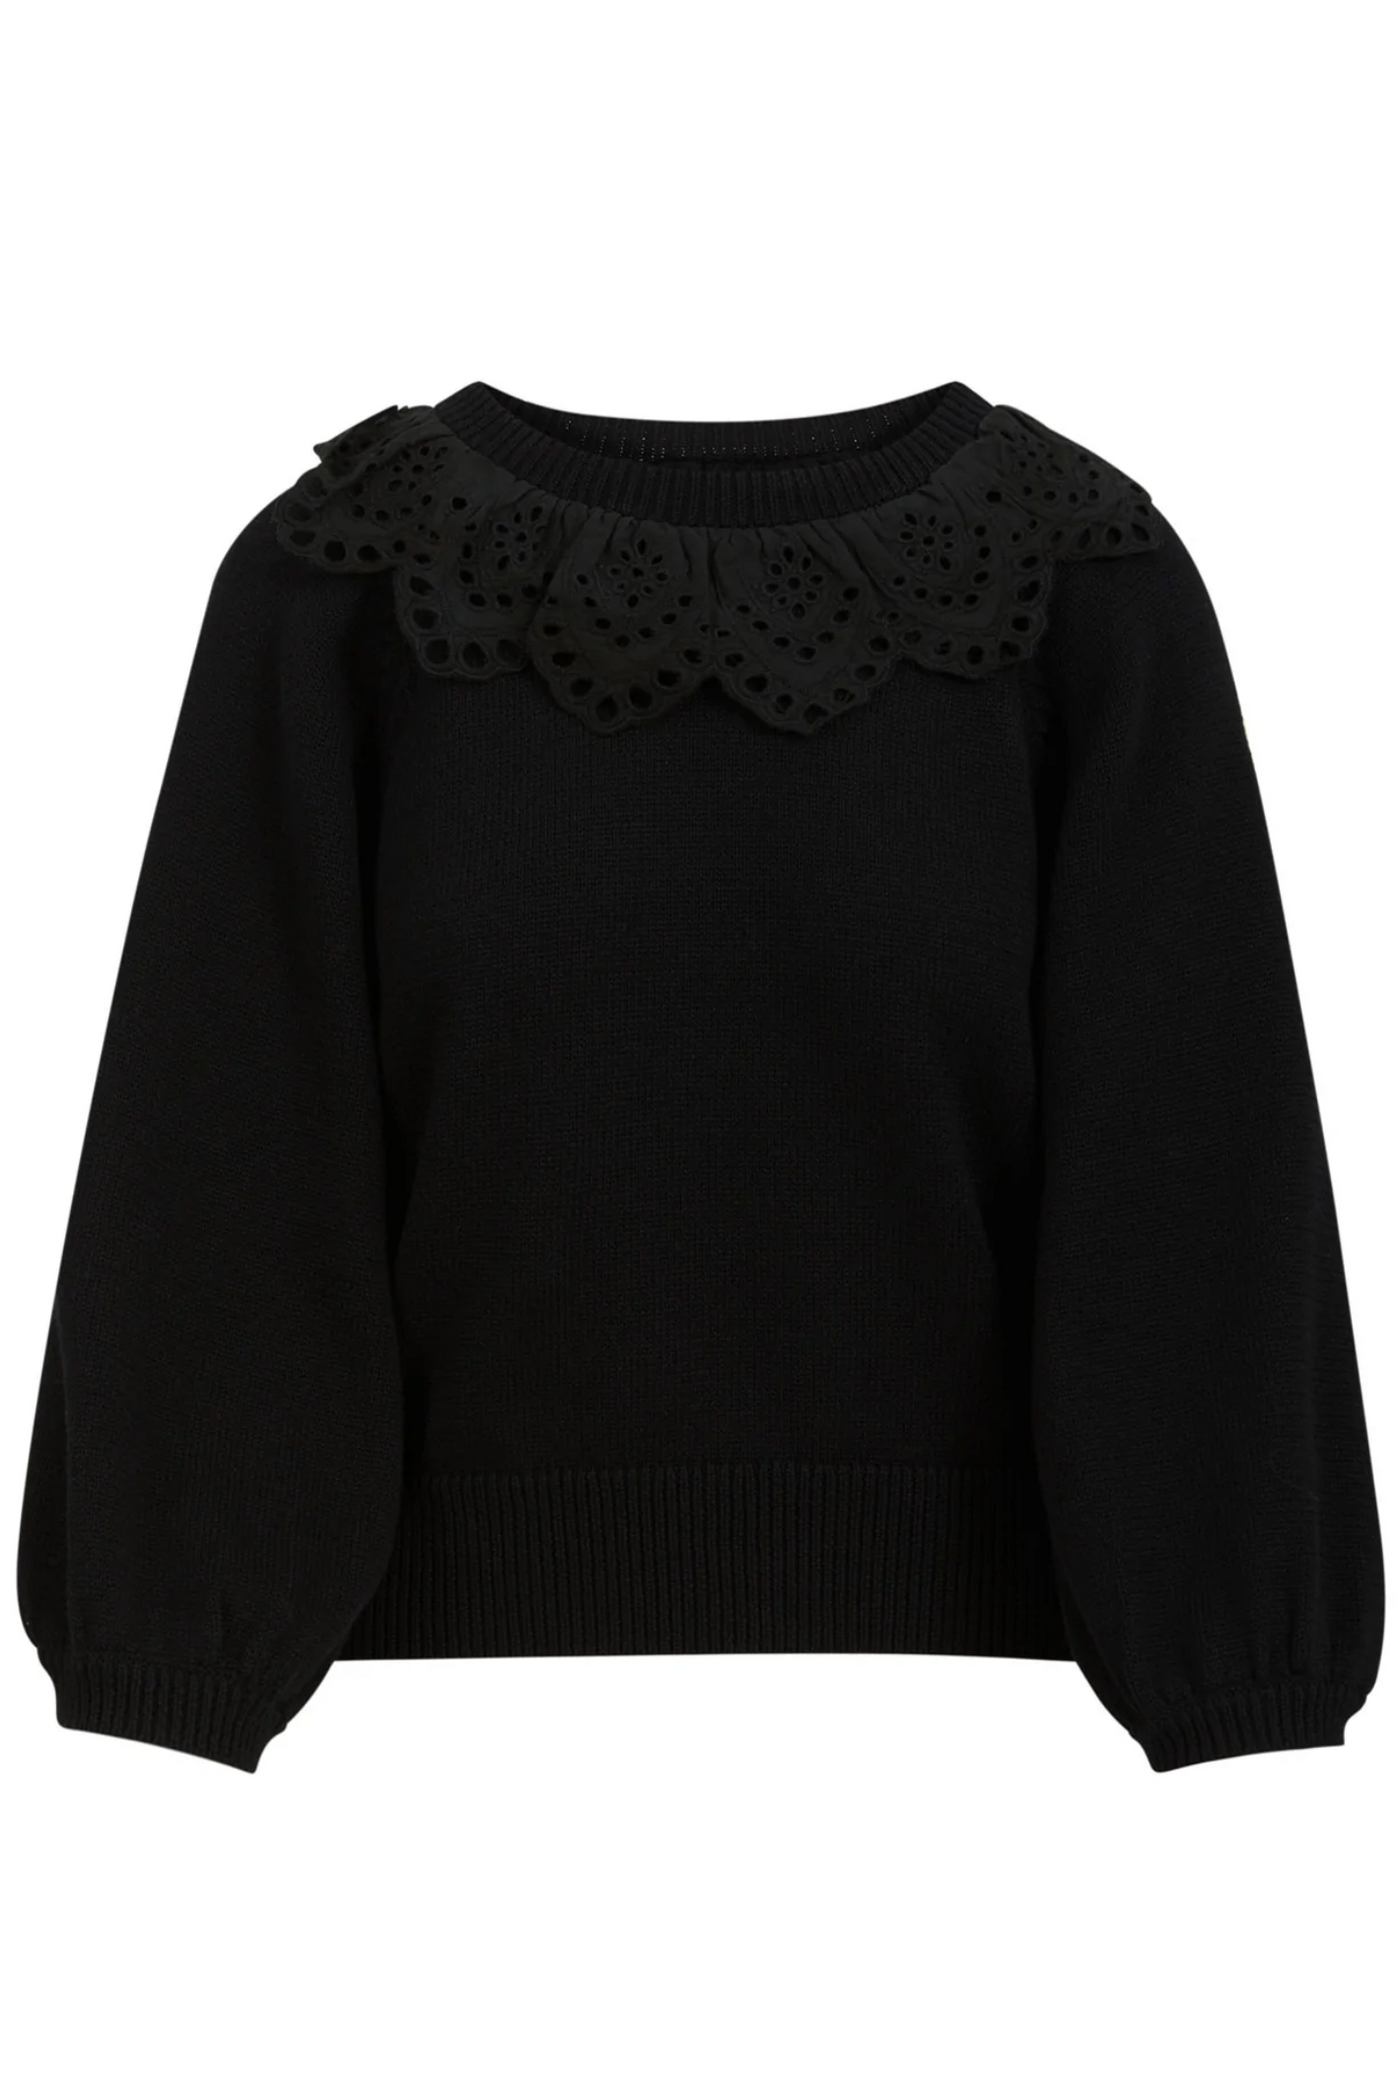 Coster Copenhagen Black Embroidered knit | Jezabel Boutique